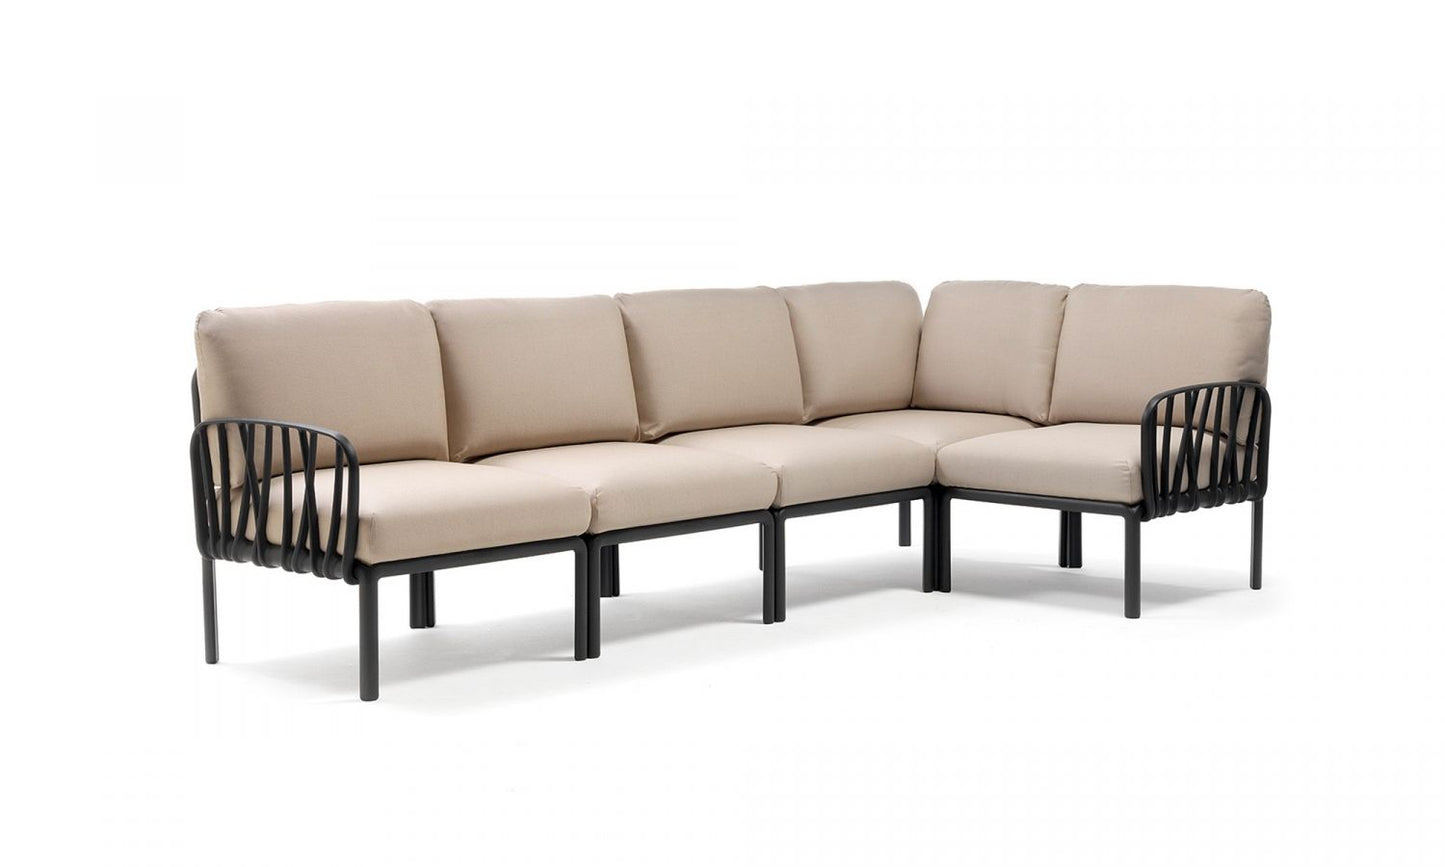 Komodo 5 modular sofa in fiberglass resin - Nardi